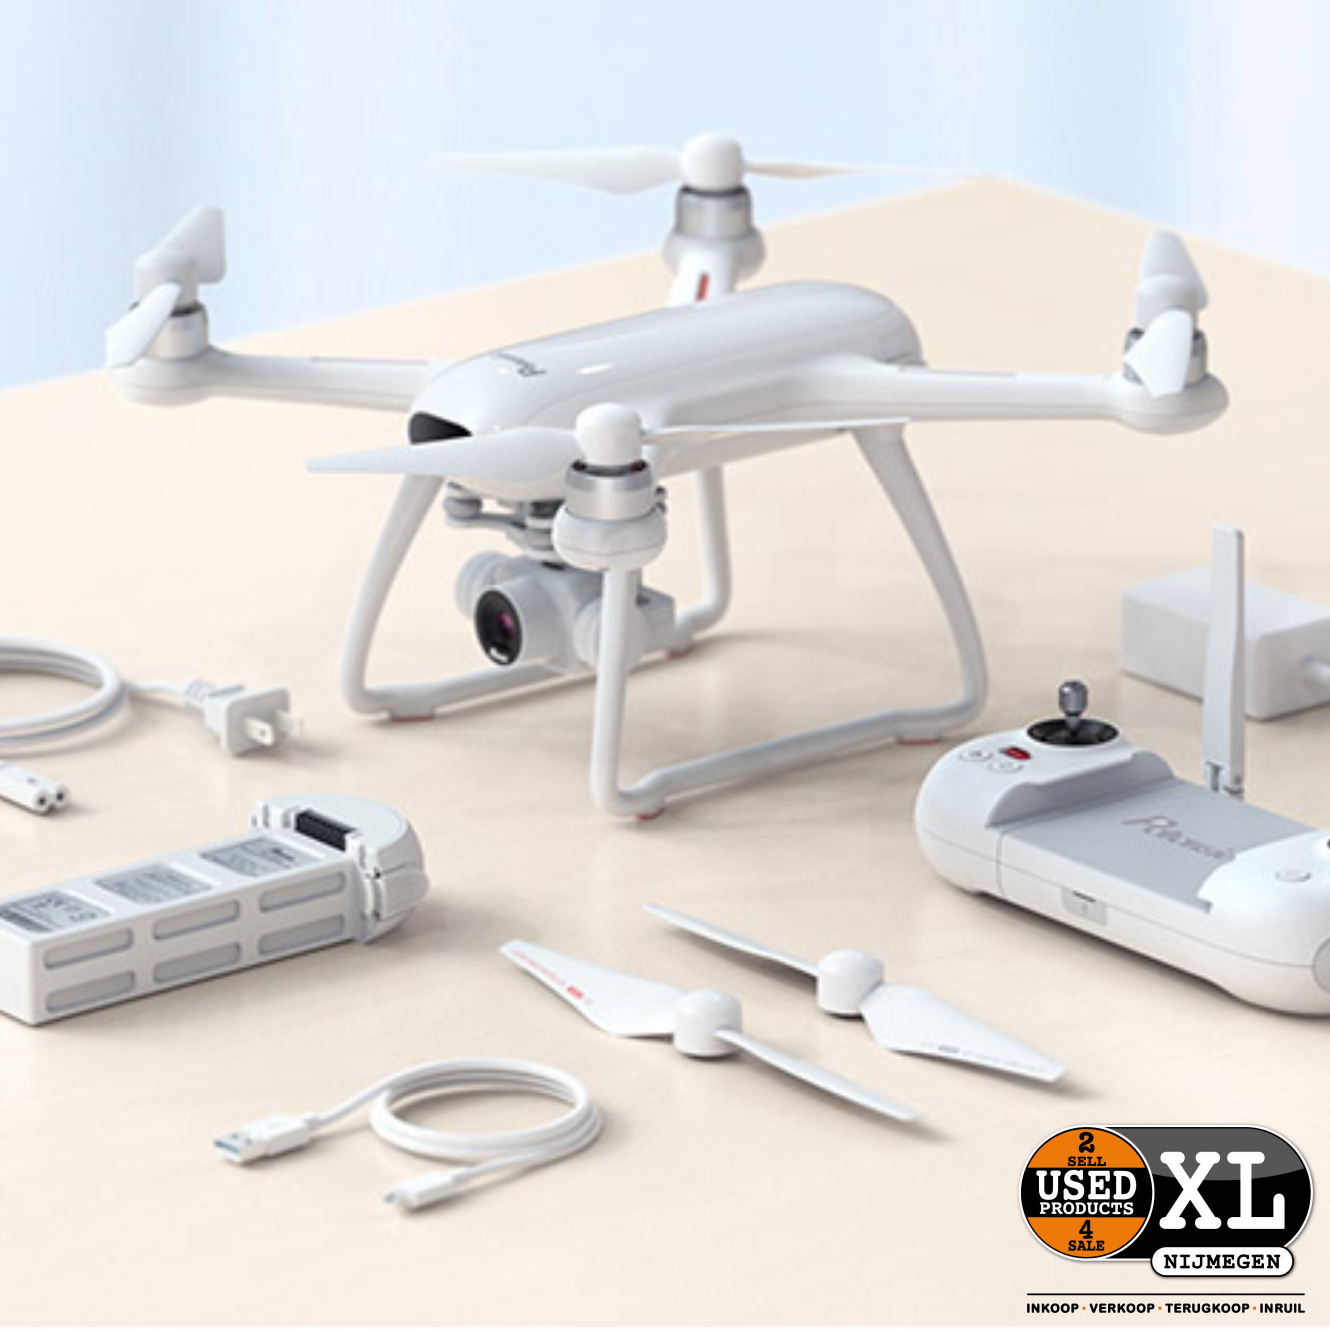 ondernemer Dusver chirurg Potensic Dreamer Drone met 4K camera | Nette Staat - Used Products Nijmegen  XL